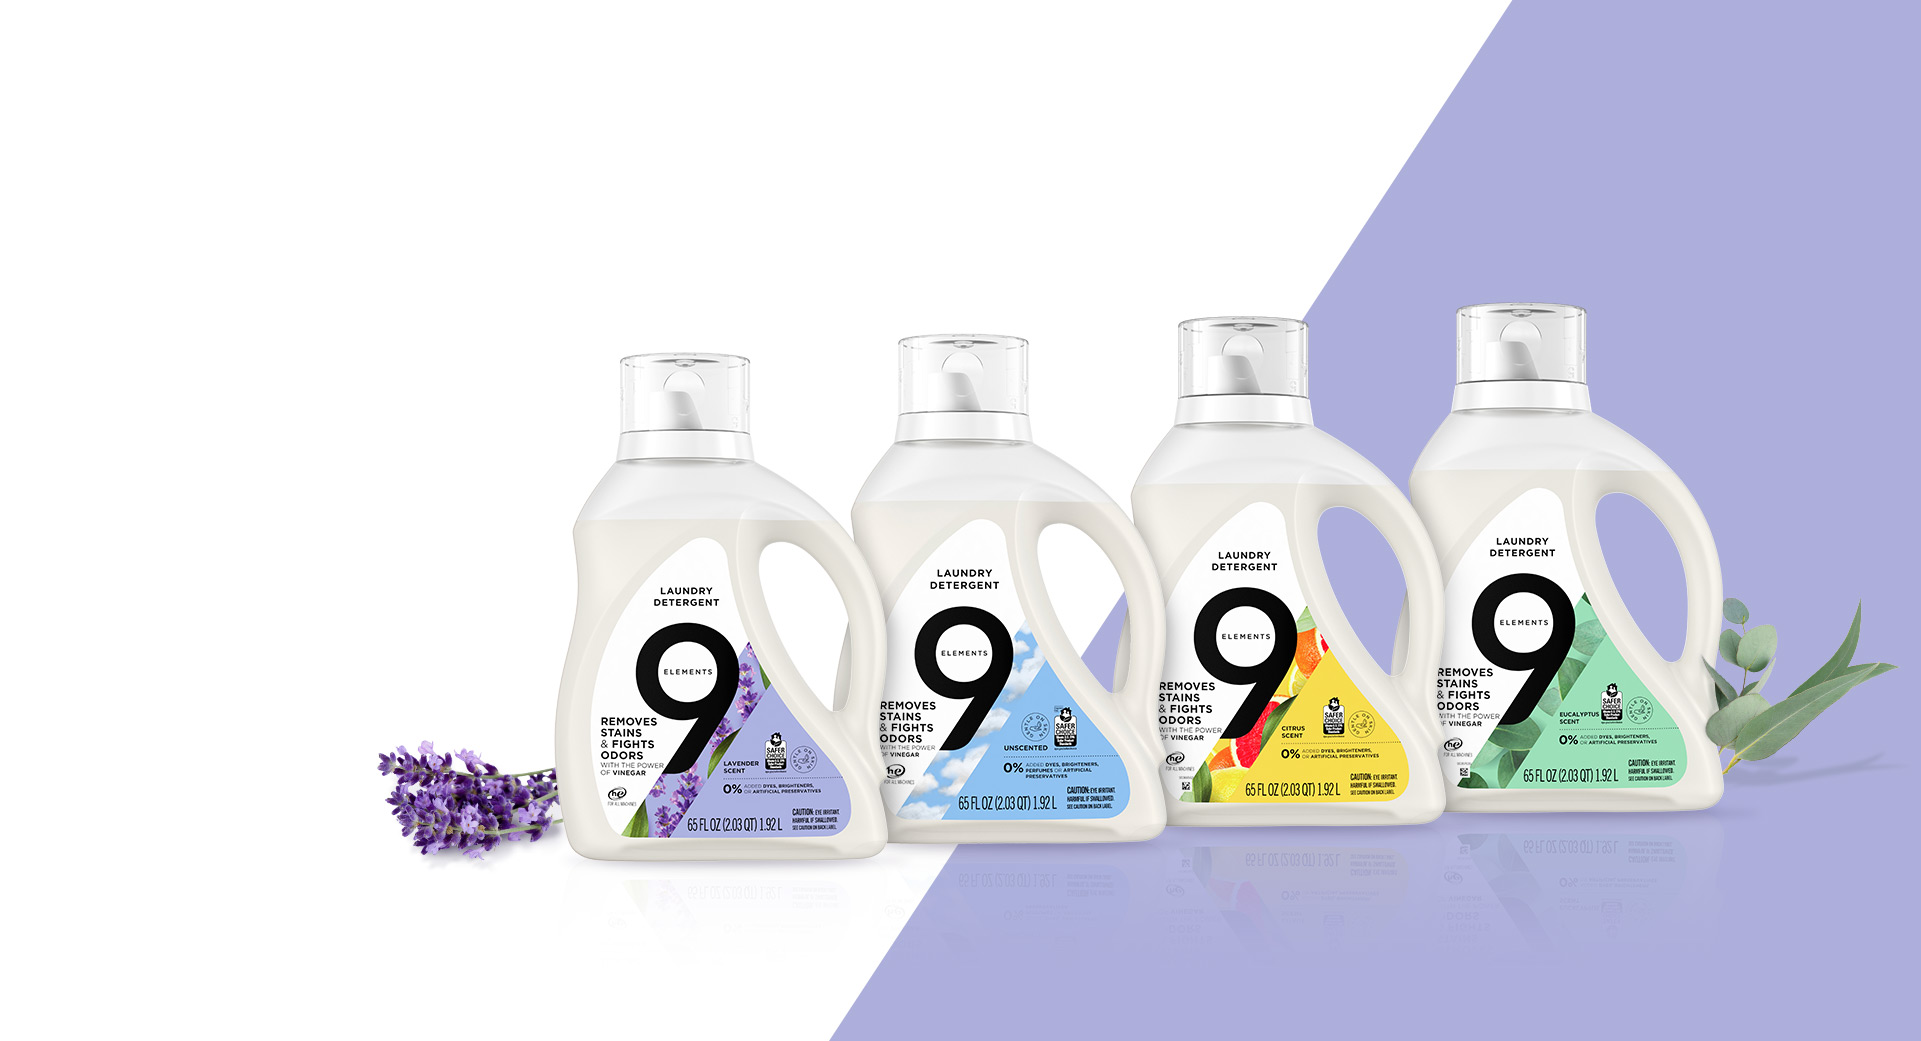 9 Elements Laundry detergents with lavender, citrus and eucalyptus scents